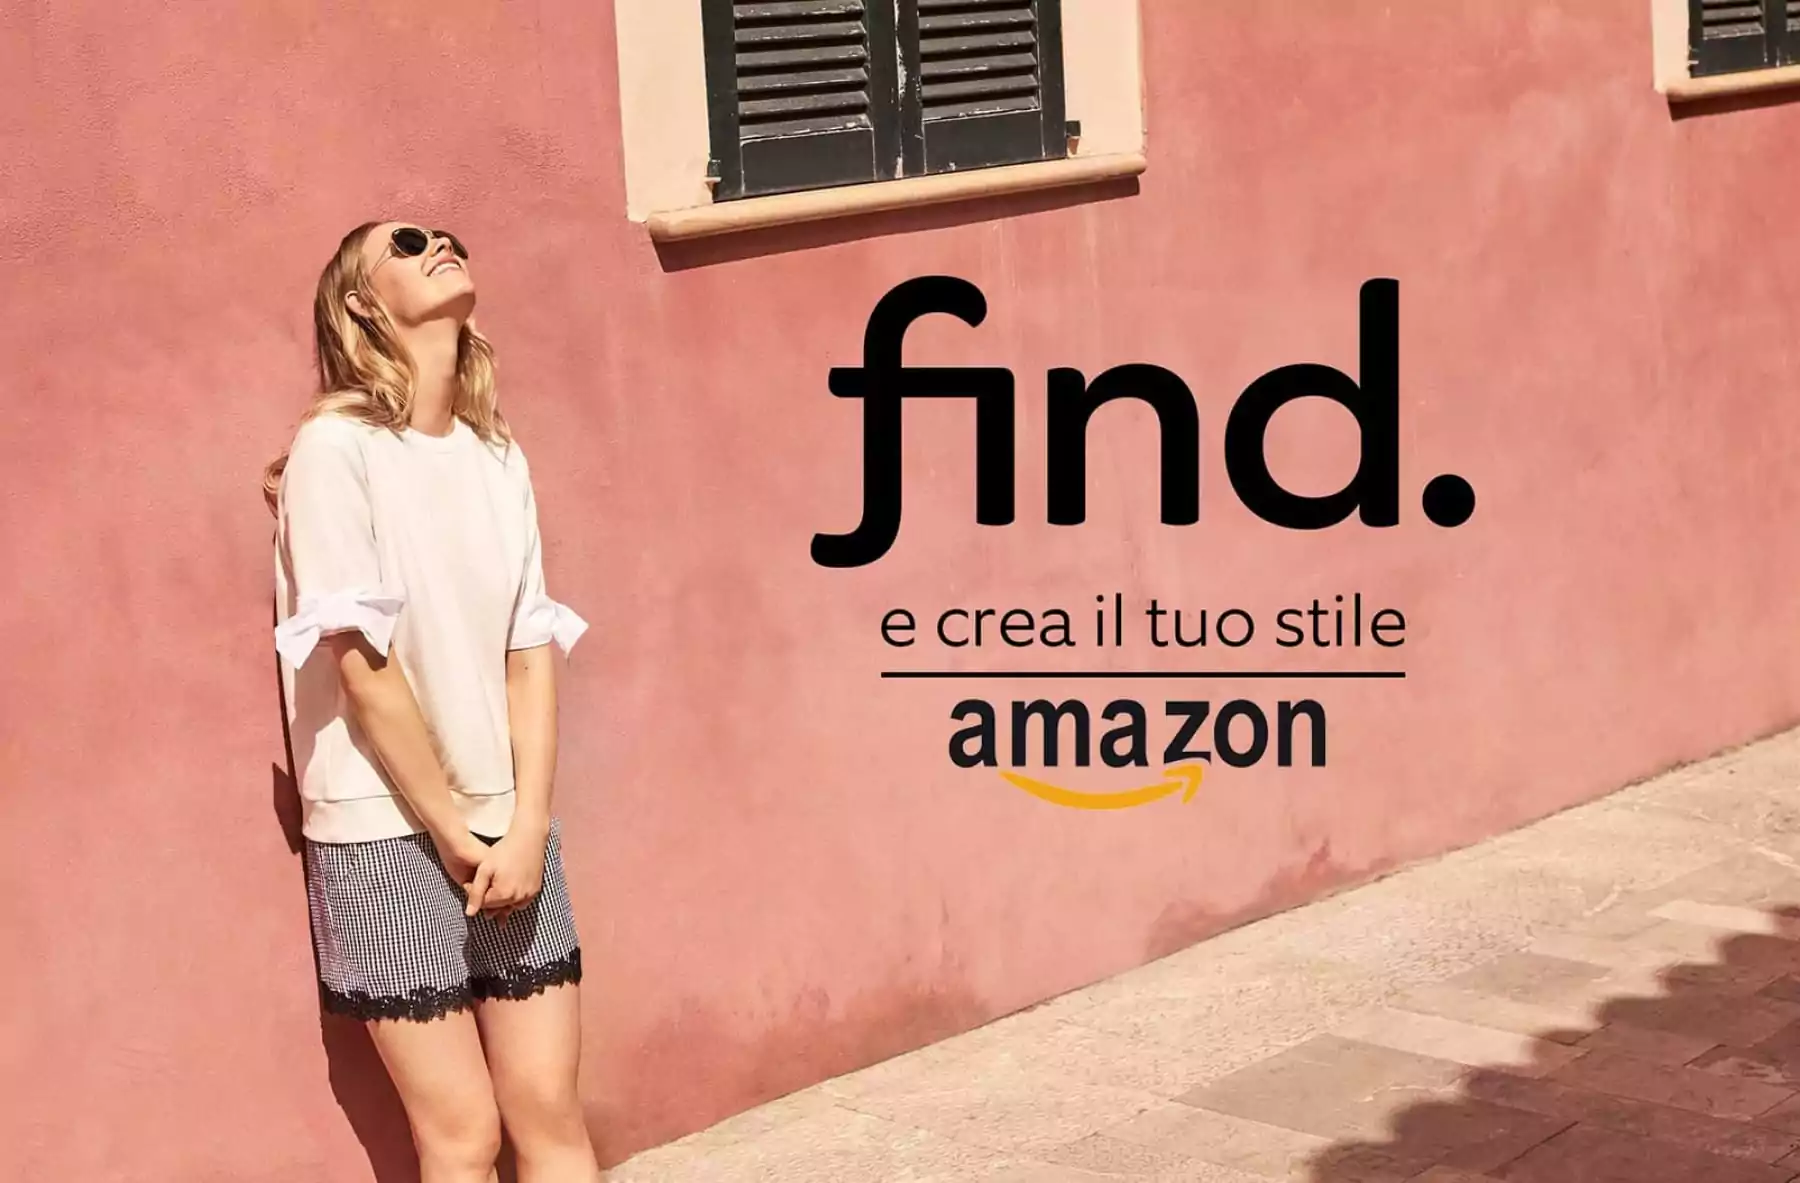 Arriva “Amazon FIND.” una linea moda firmata Amazon